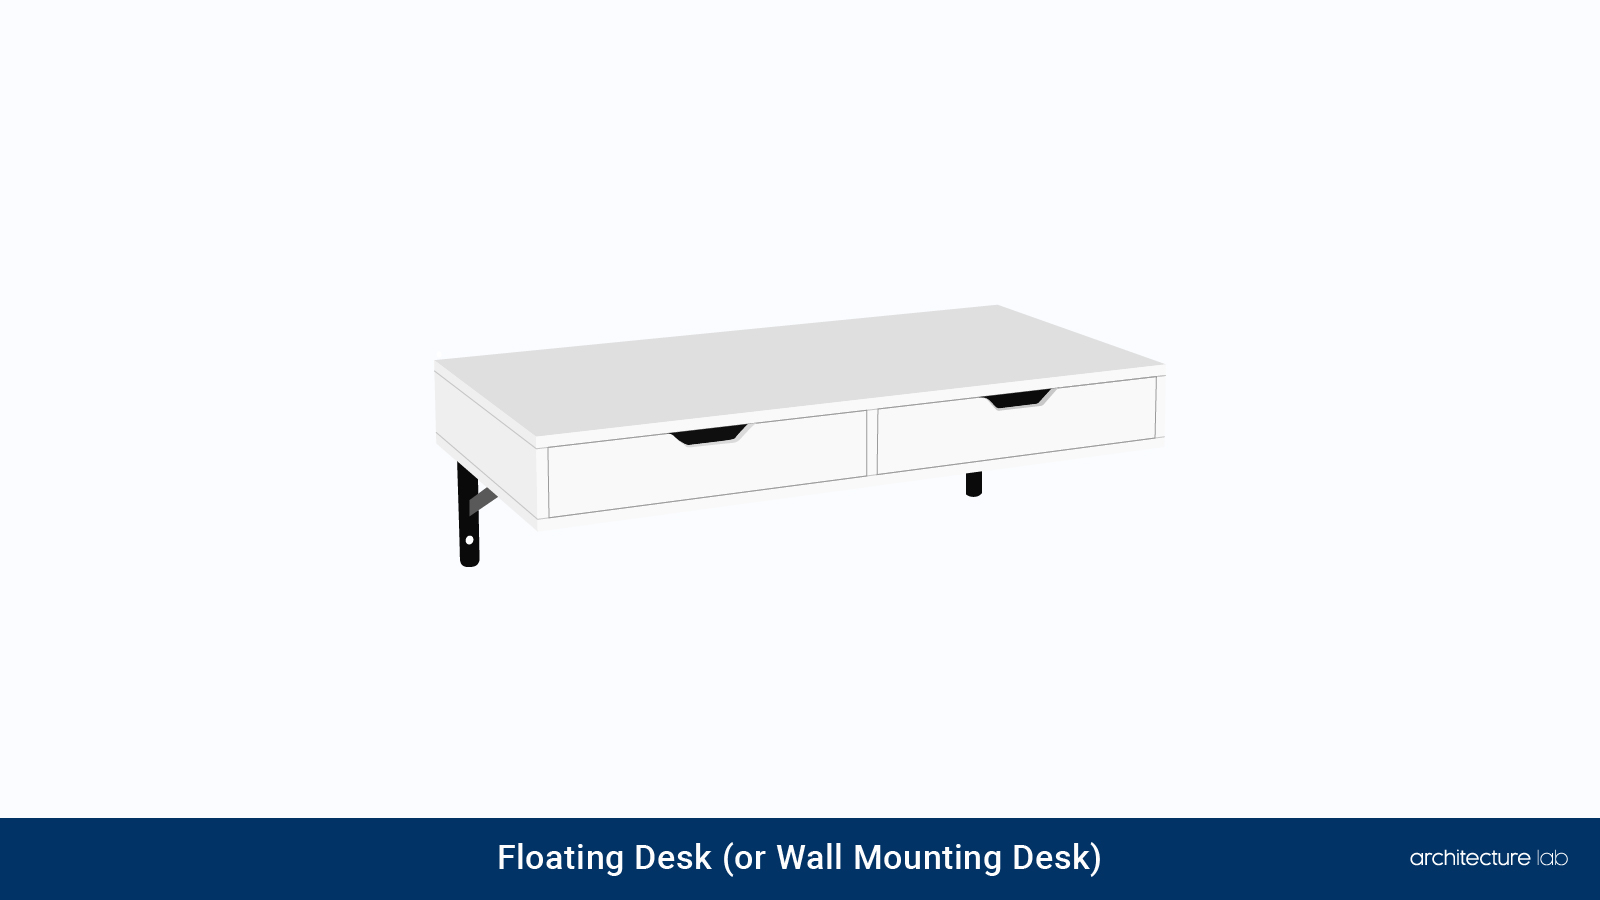 7. Floating desk (or wall mounting desk)